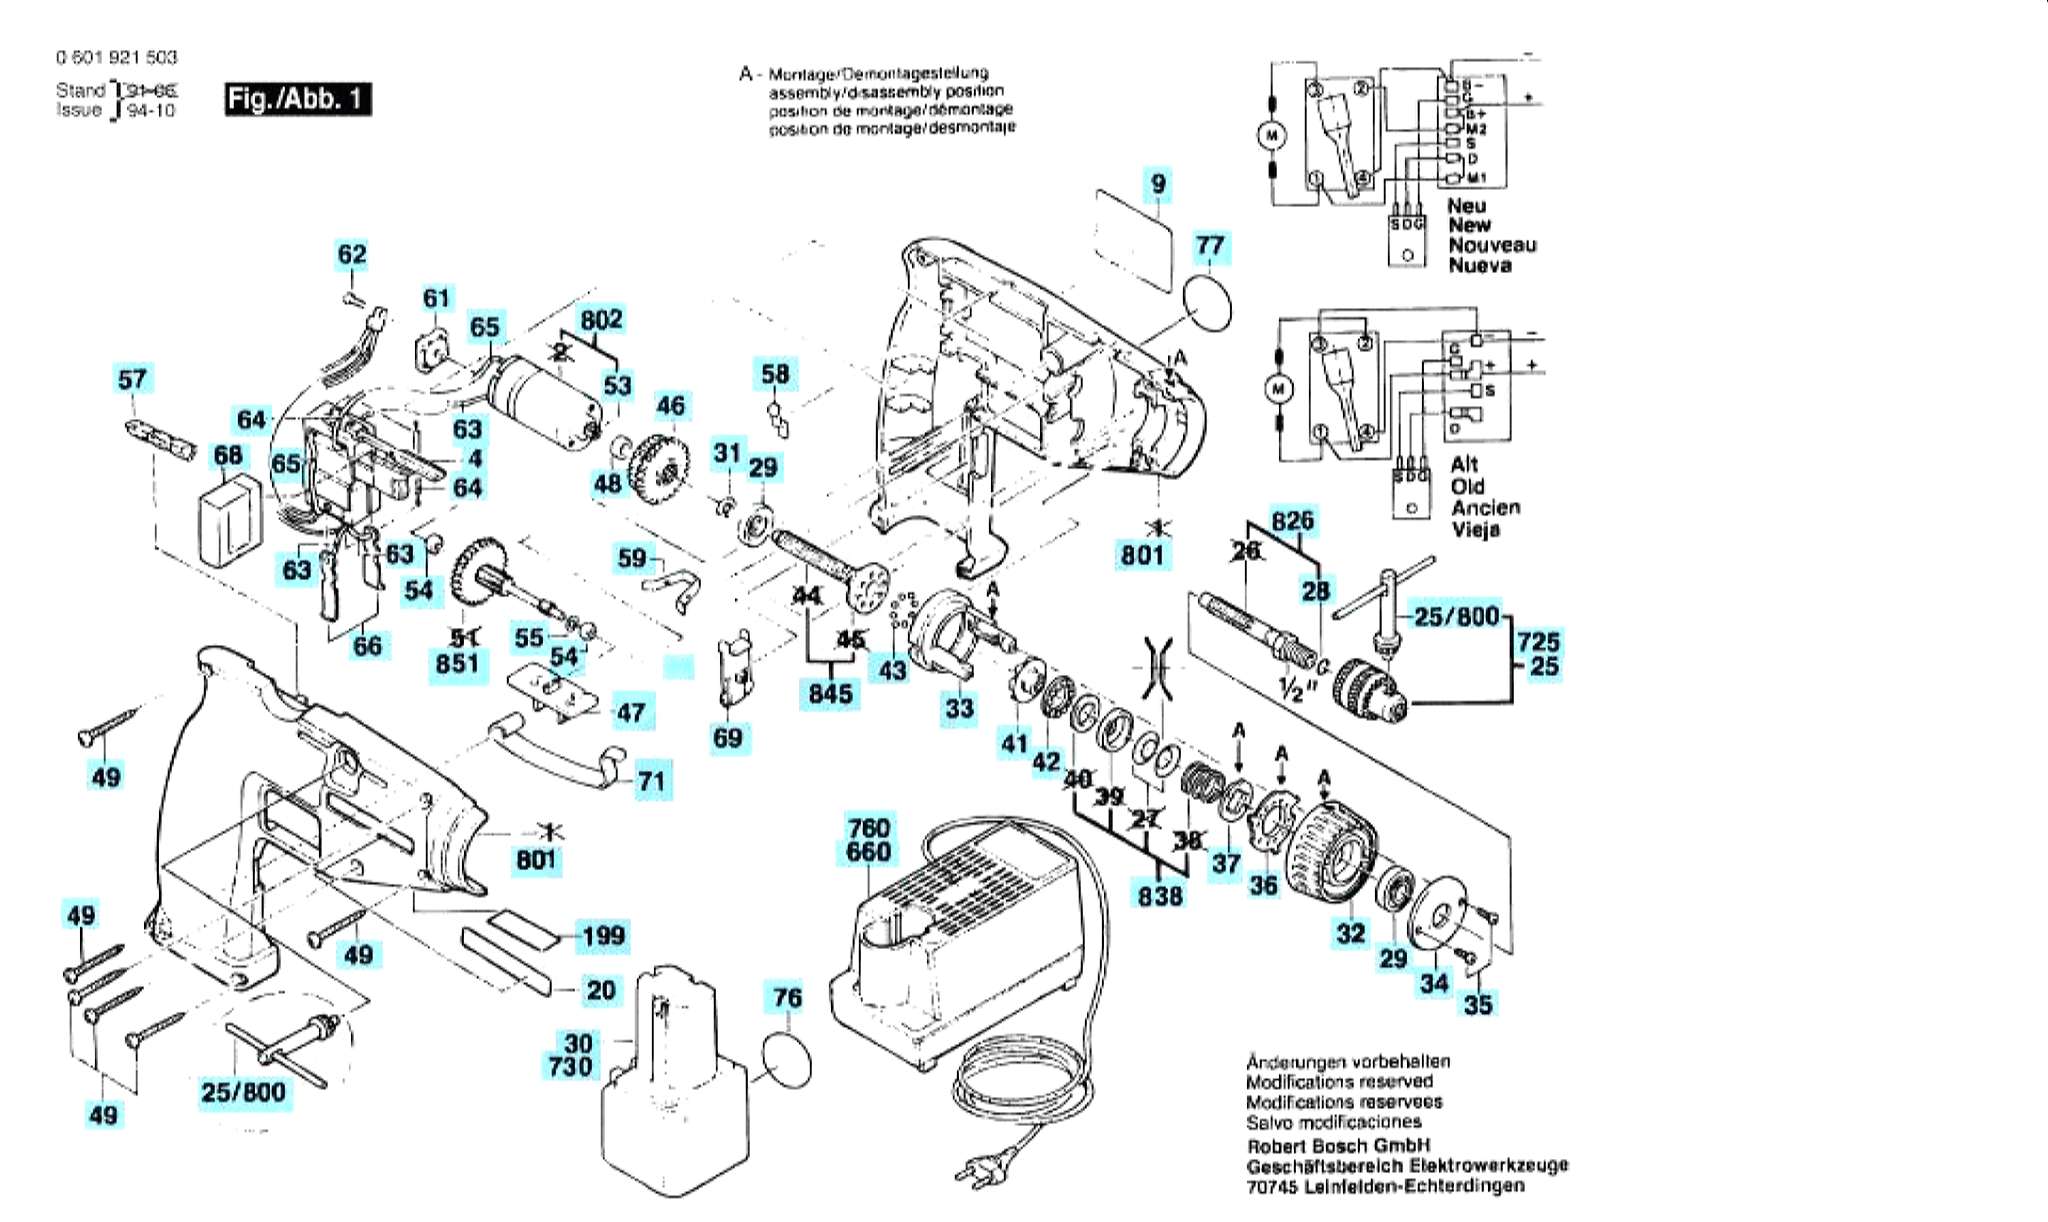 Запчасти, схема и деталировка Bosch GSR 12 VES (ТИП 0601921520)